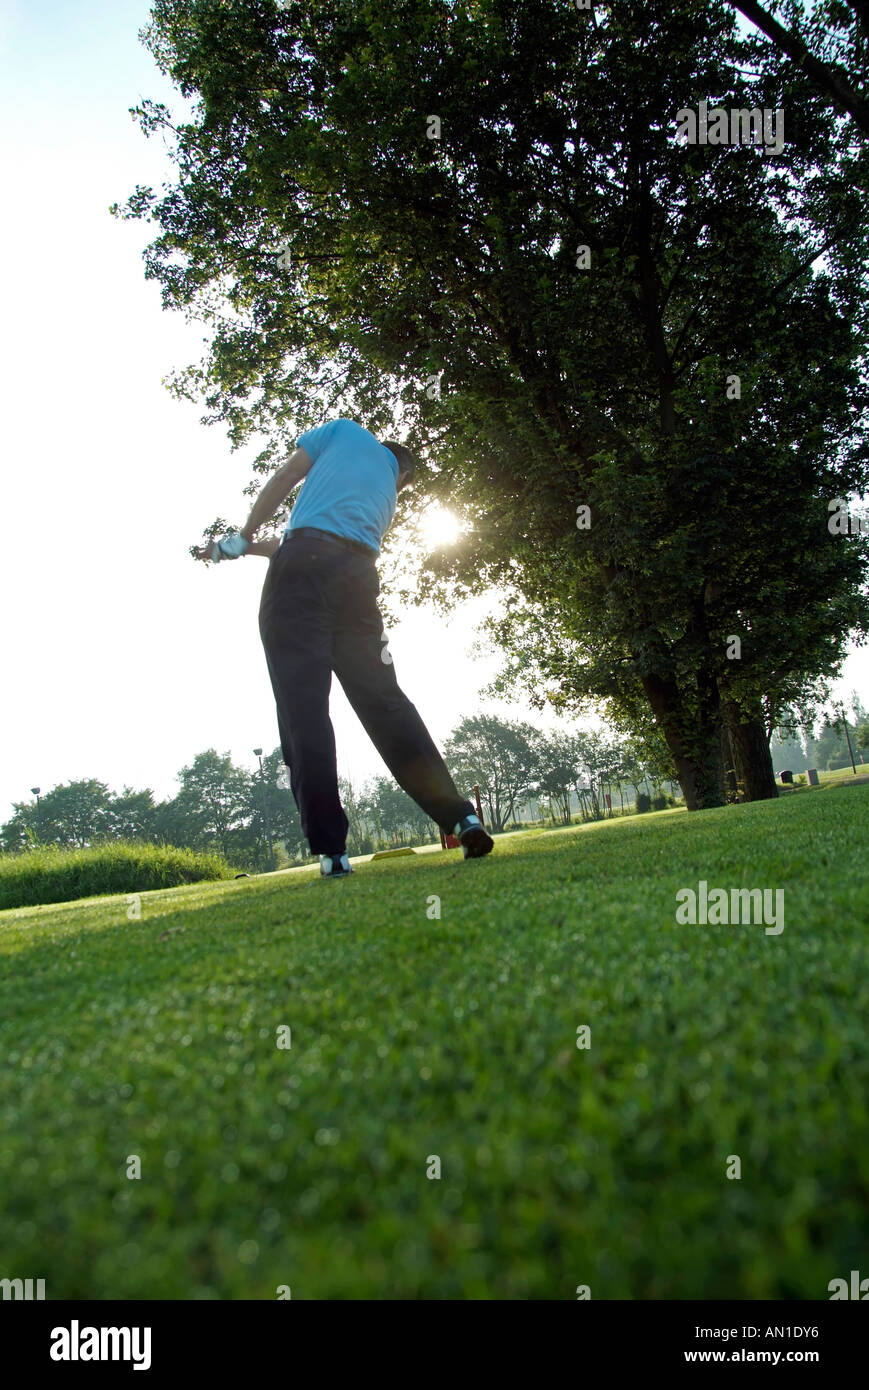 Golf Golfing Golfsport, close-up of a golf player hitting his ball Stock Photo